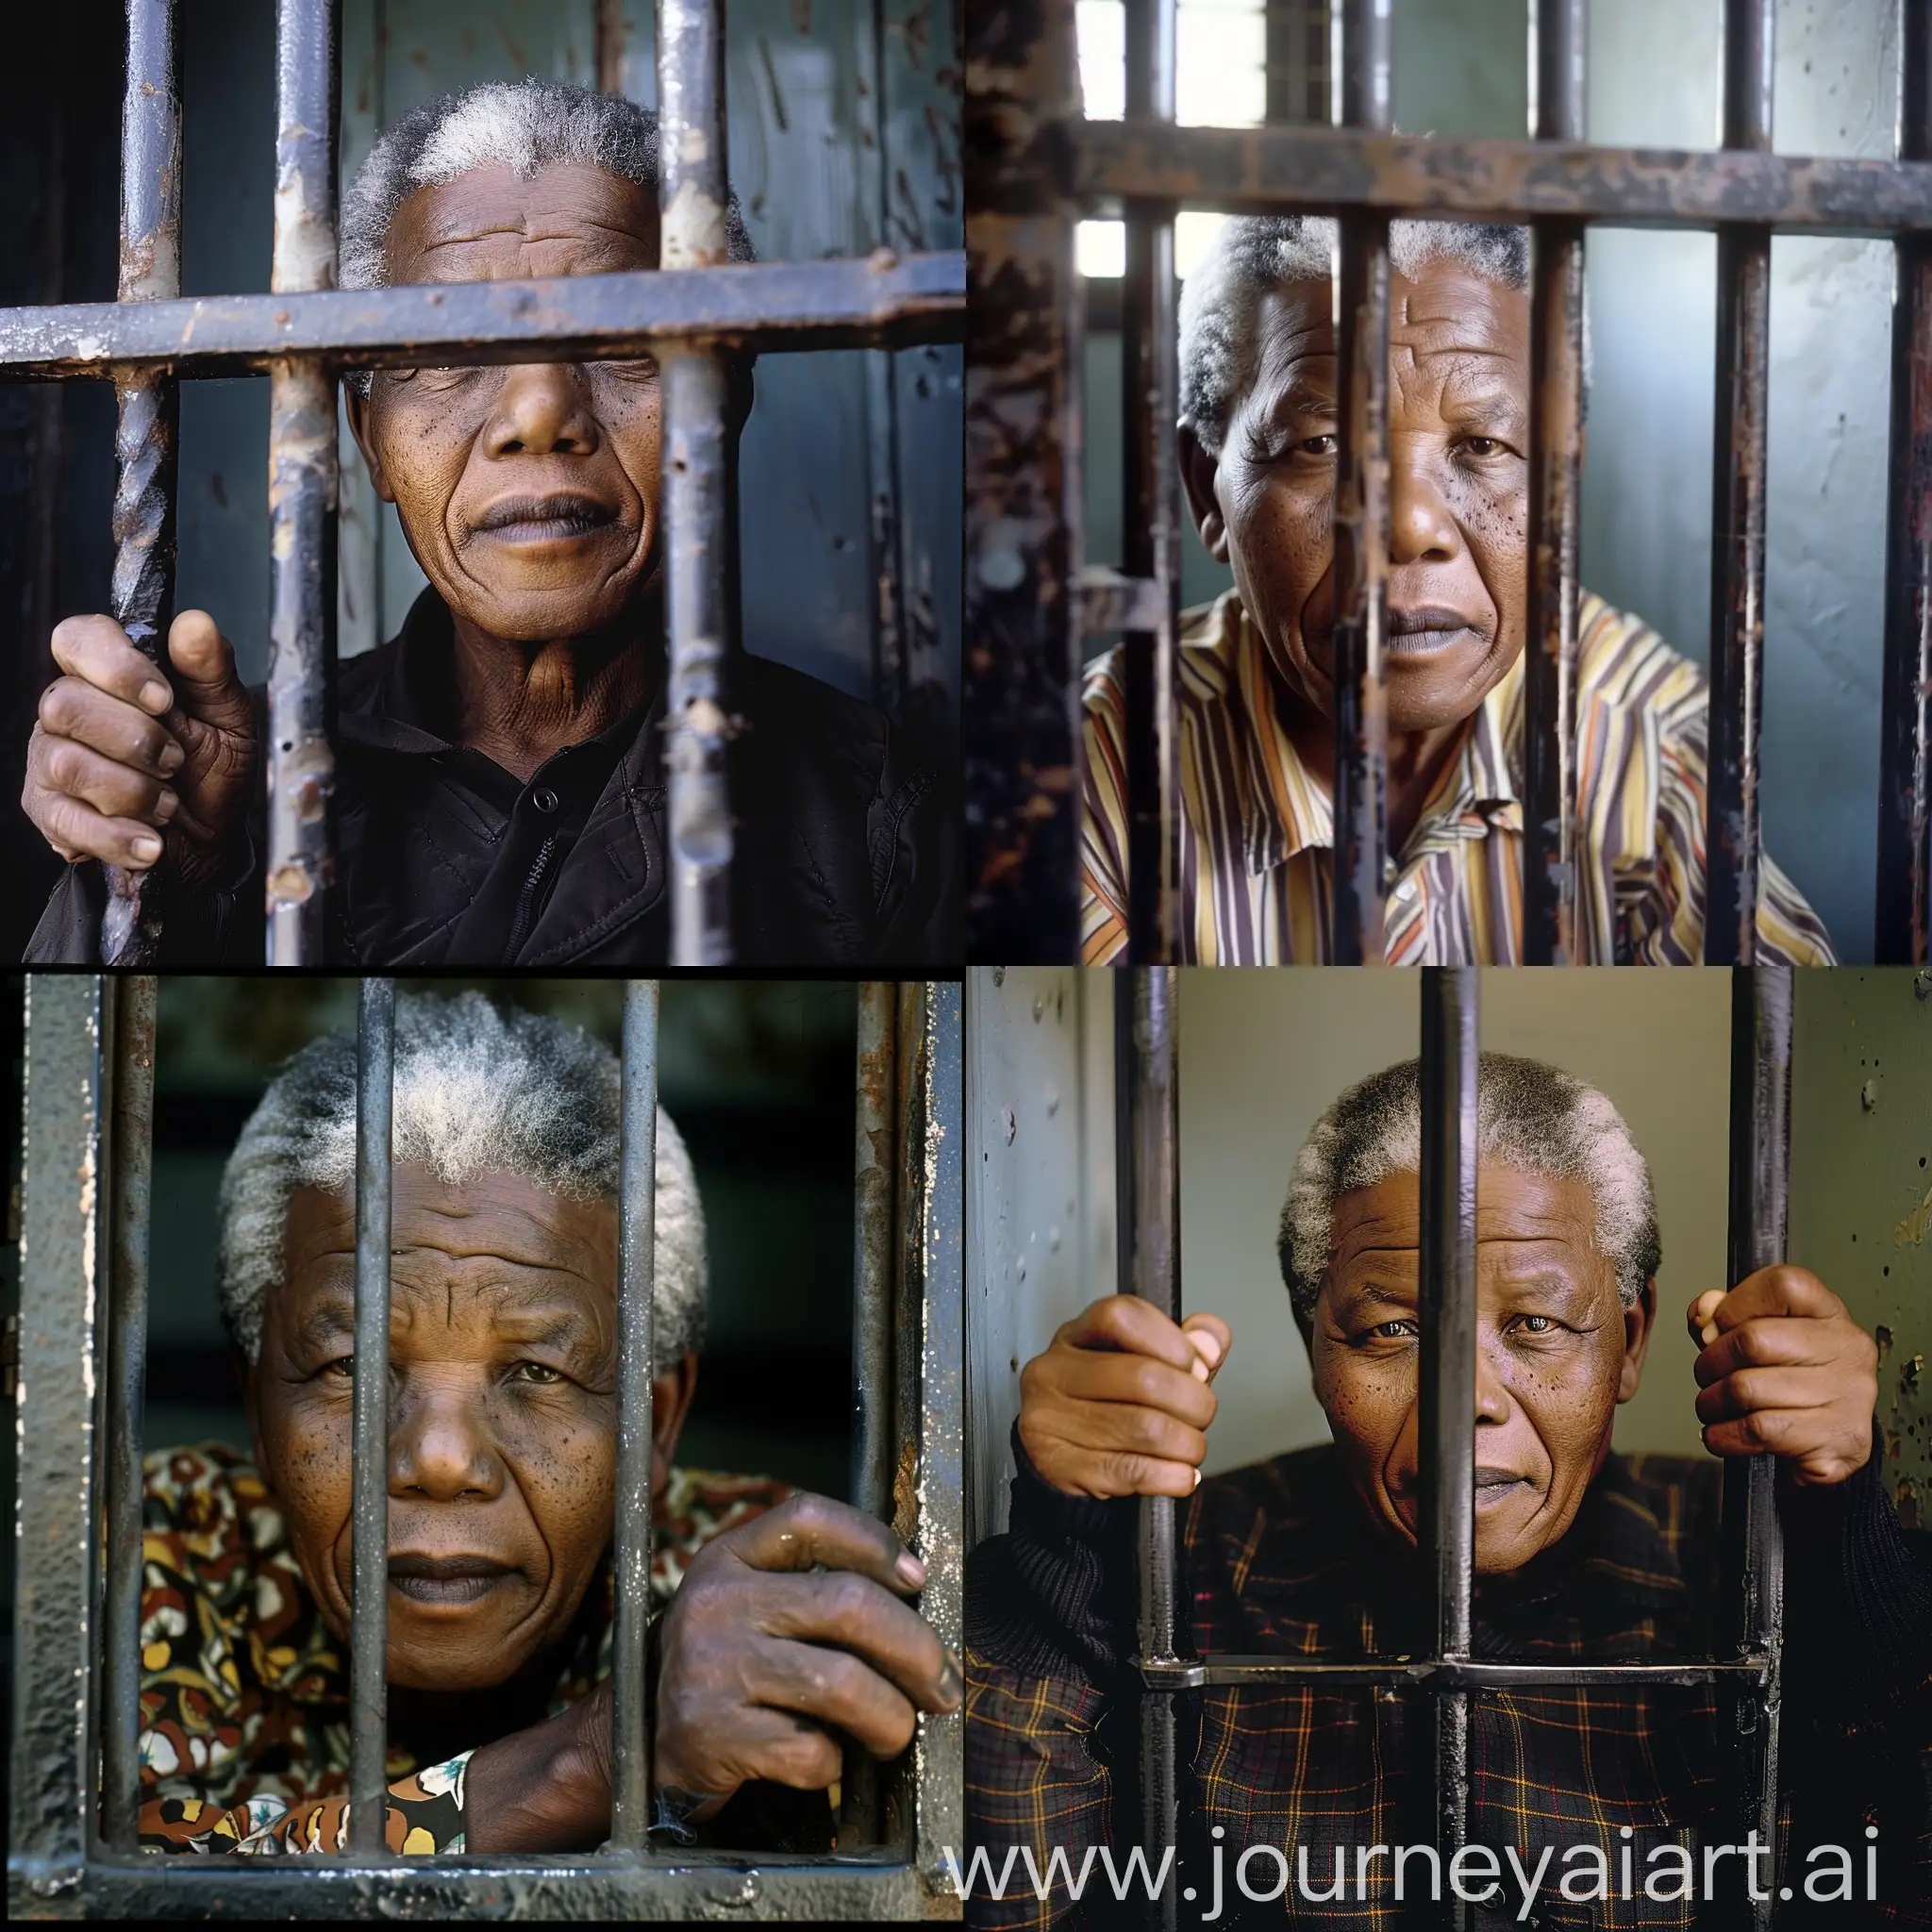 Nelson-Mandela-Imprisoned-Symbol-of-Resilience-and-Struggle